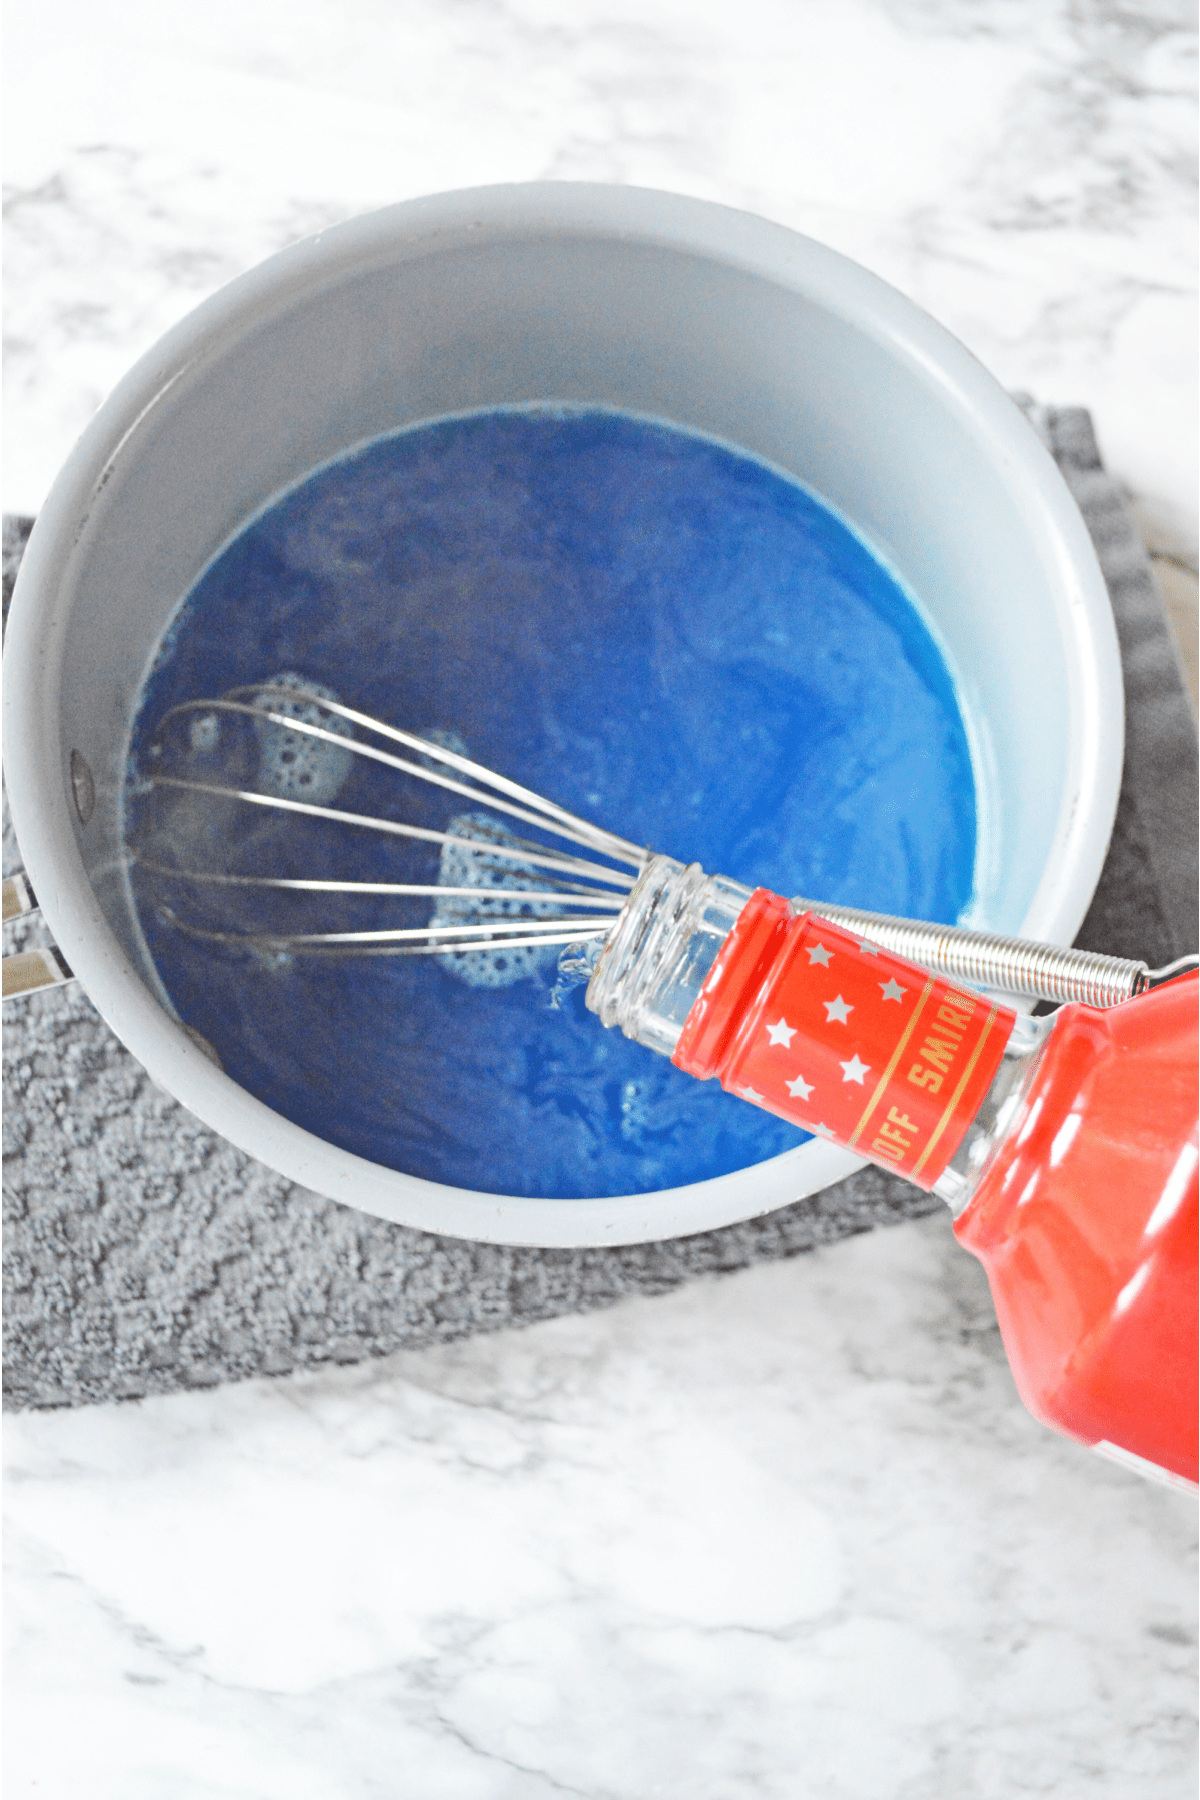 Adding vodka to blue jello